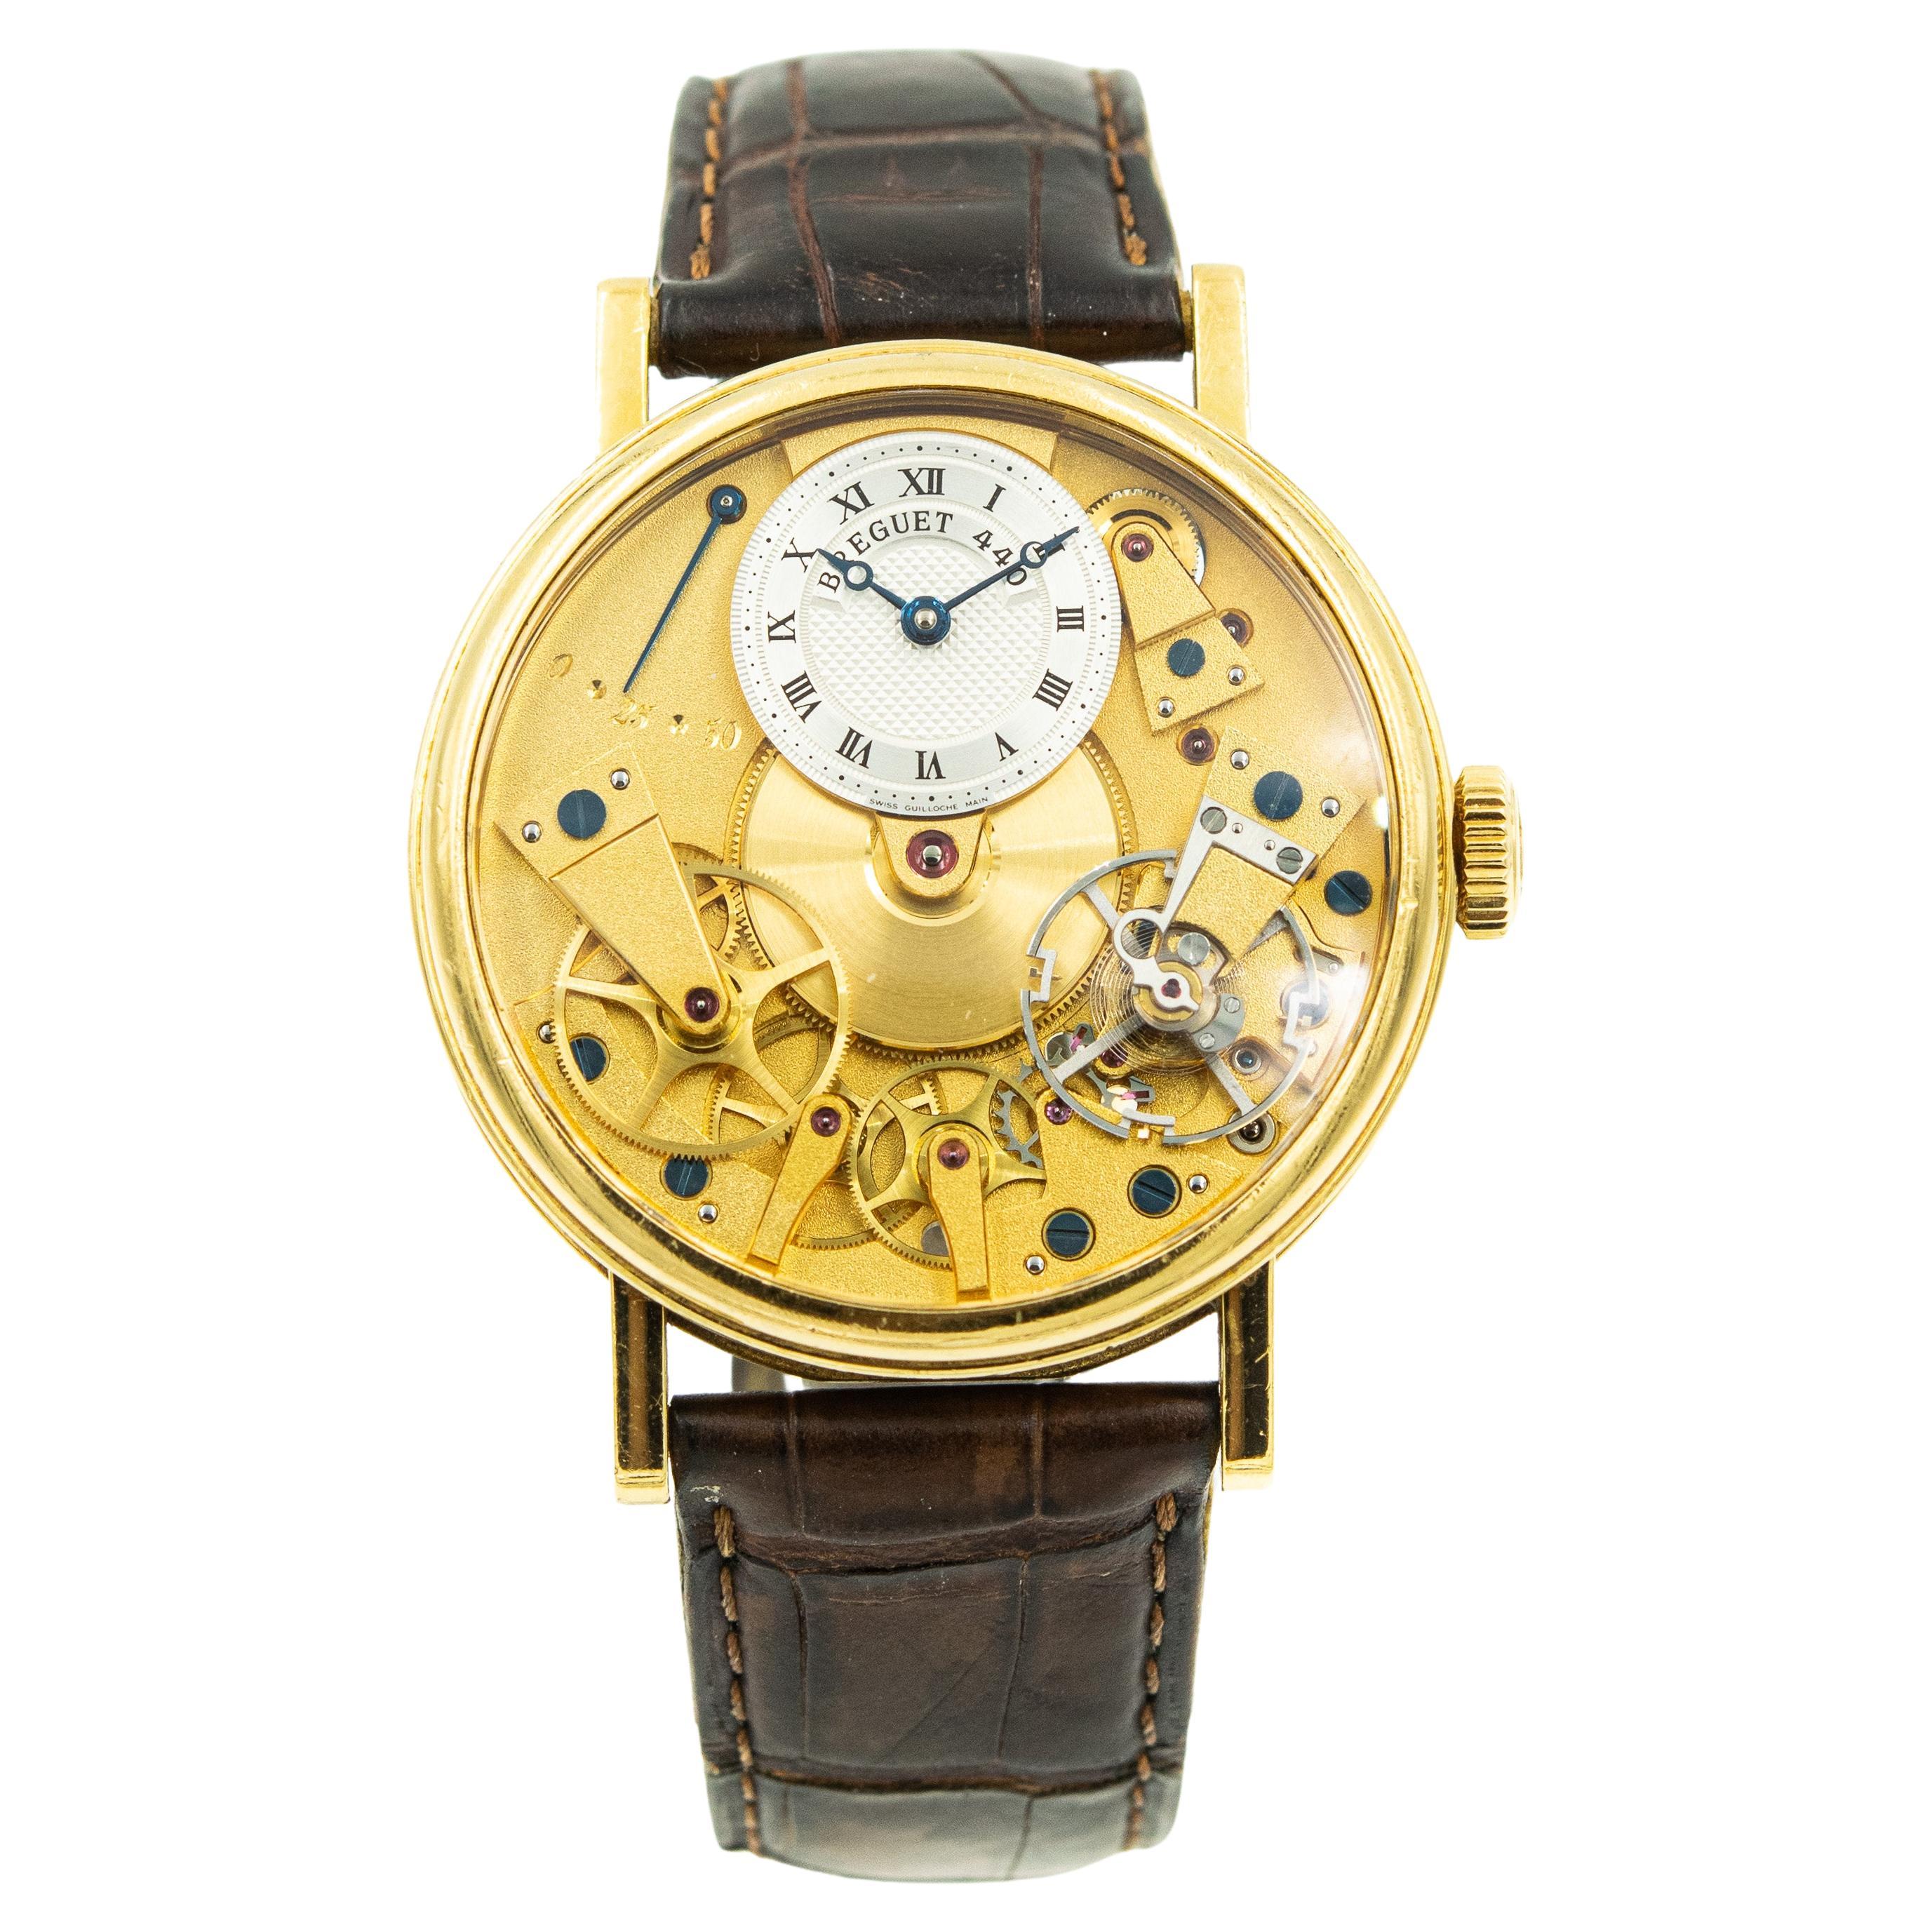 Breguet La Tradition 18k Yellow Gold Wristwatch Ref. 7027